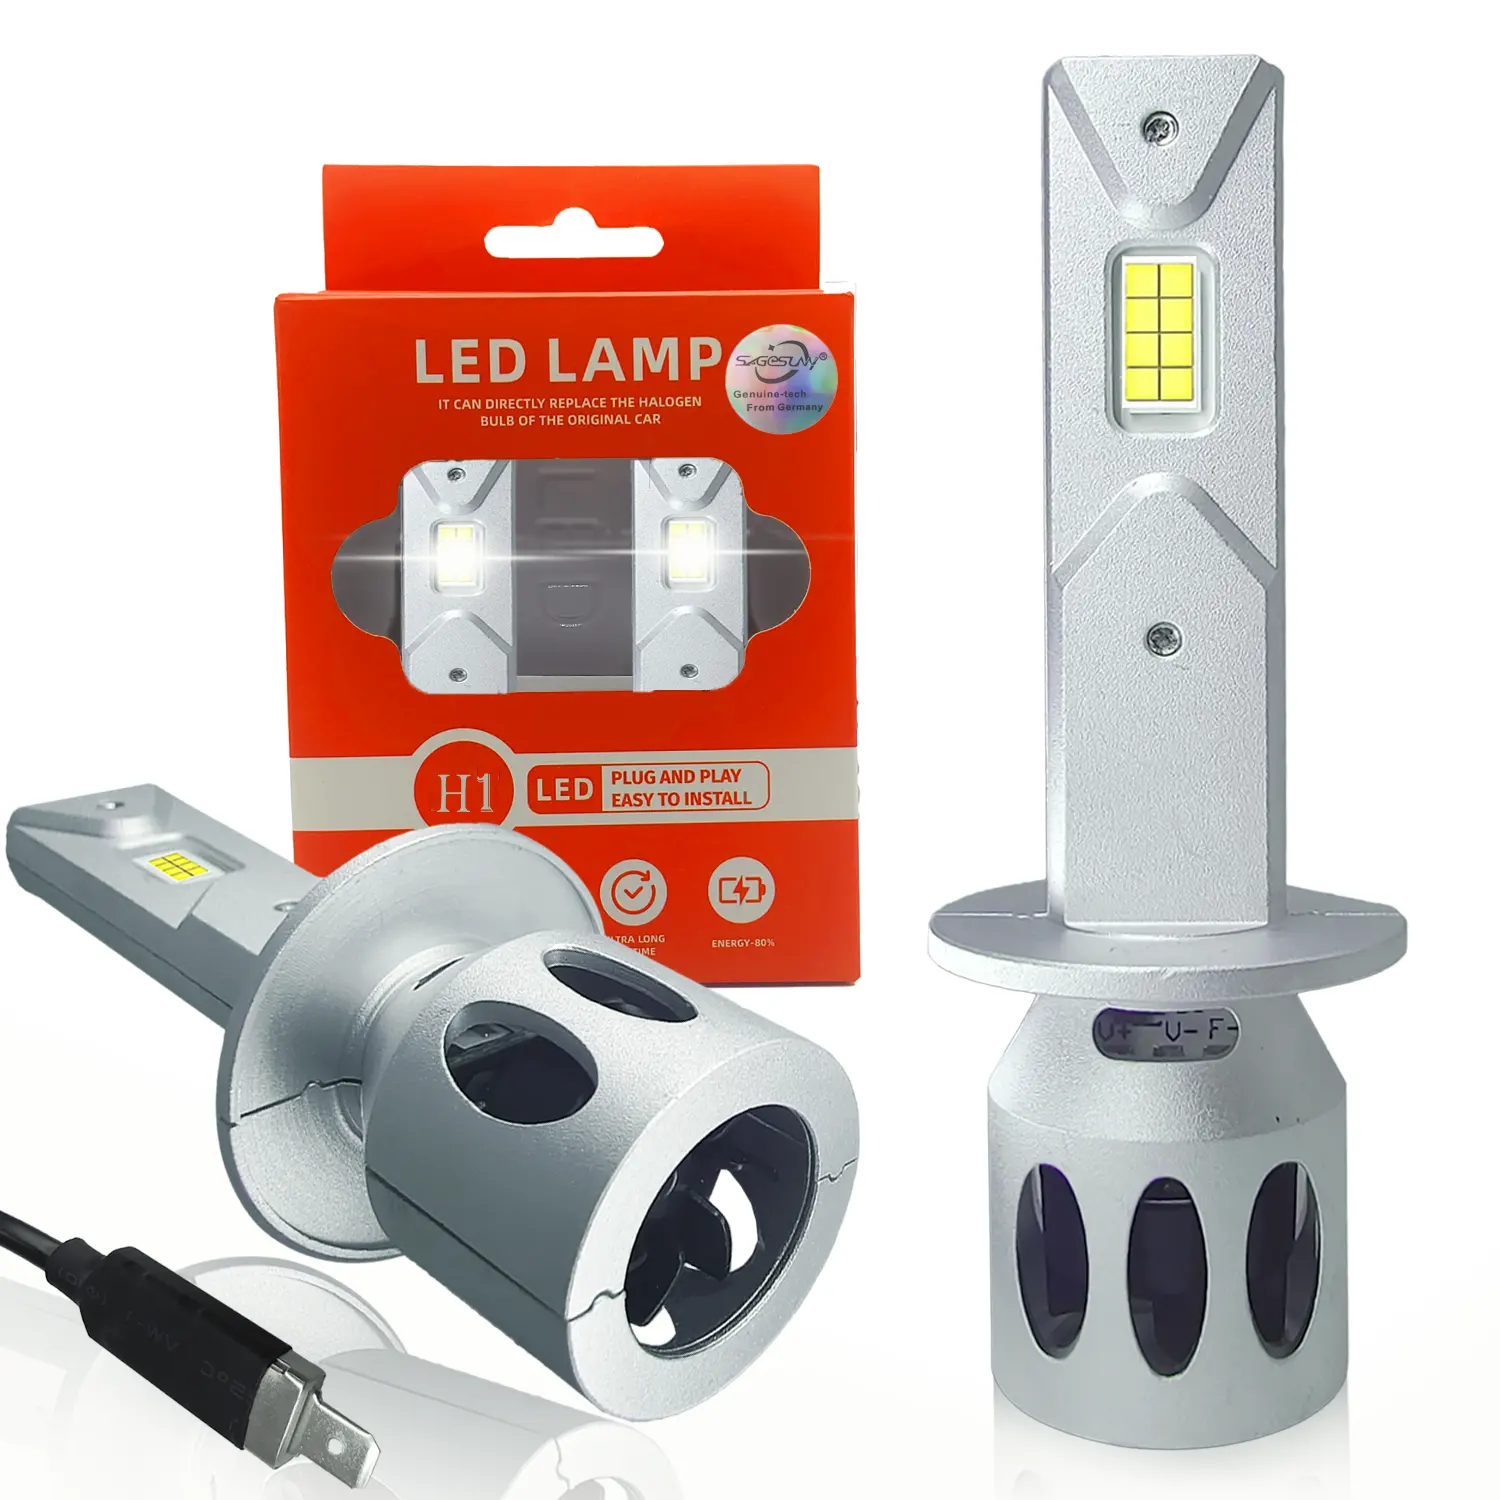 2 uds H1 bombilla LED faro 24W luz antiniebla tamaño Mini luz antiniebla LED ventilador silencioso para coche CSP Chips 2800lm